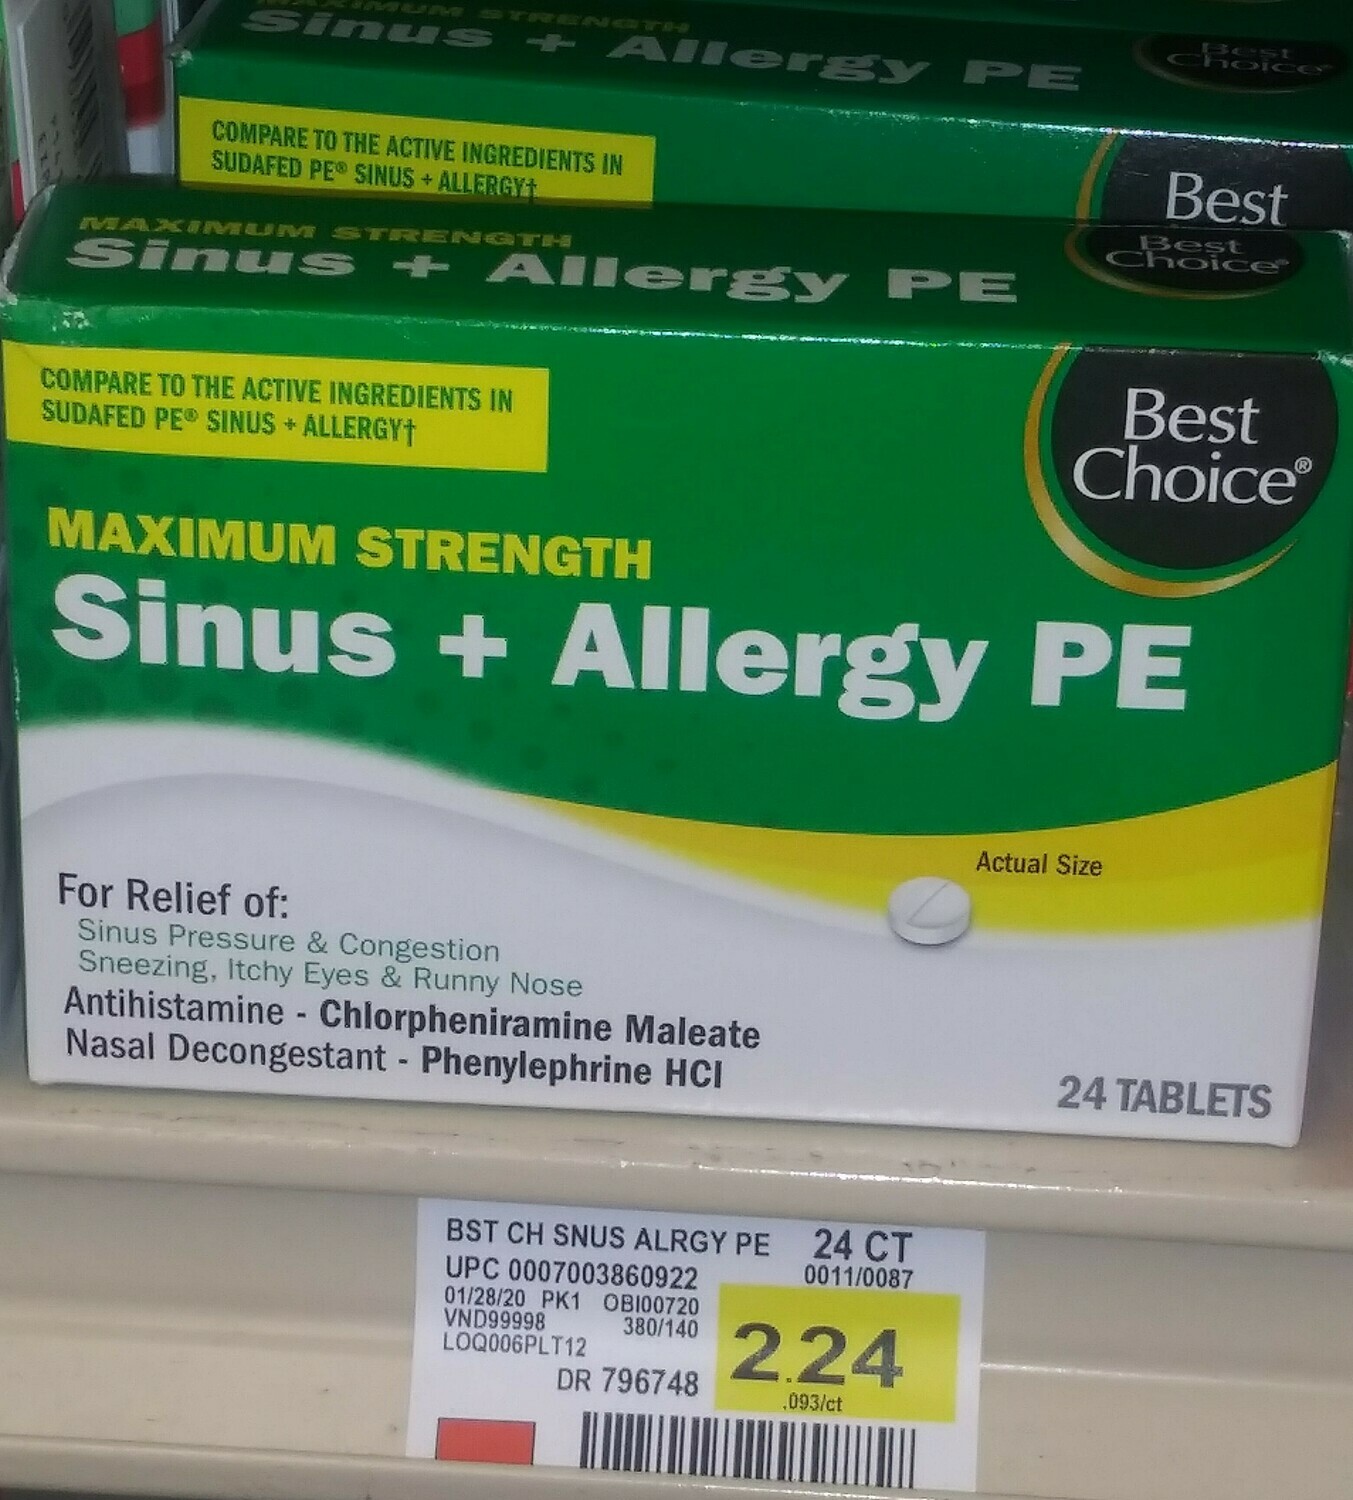 Cash Saver: Best Choice Sinus+Allergy PE 24 tablets